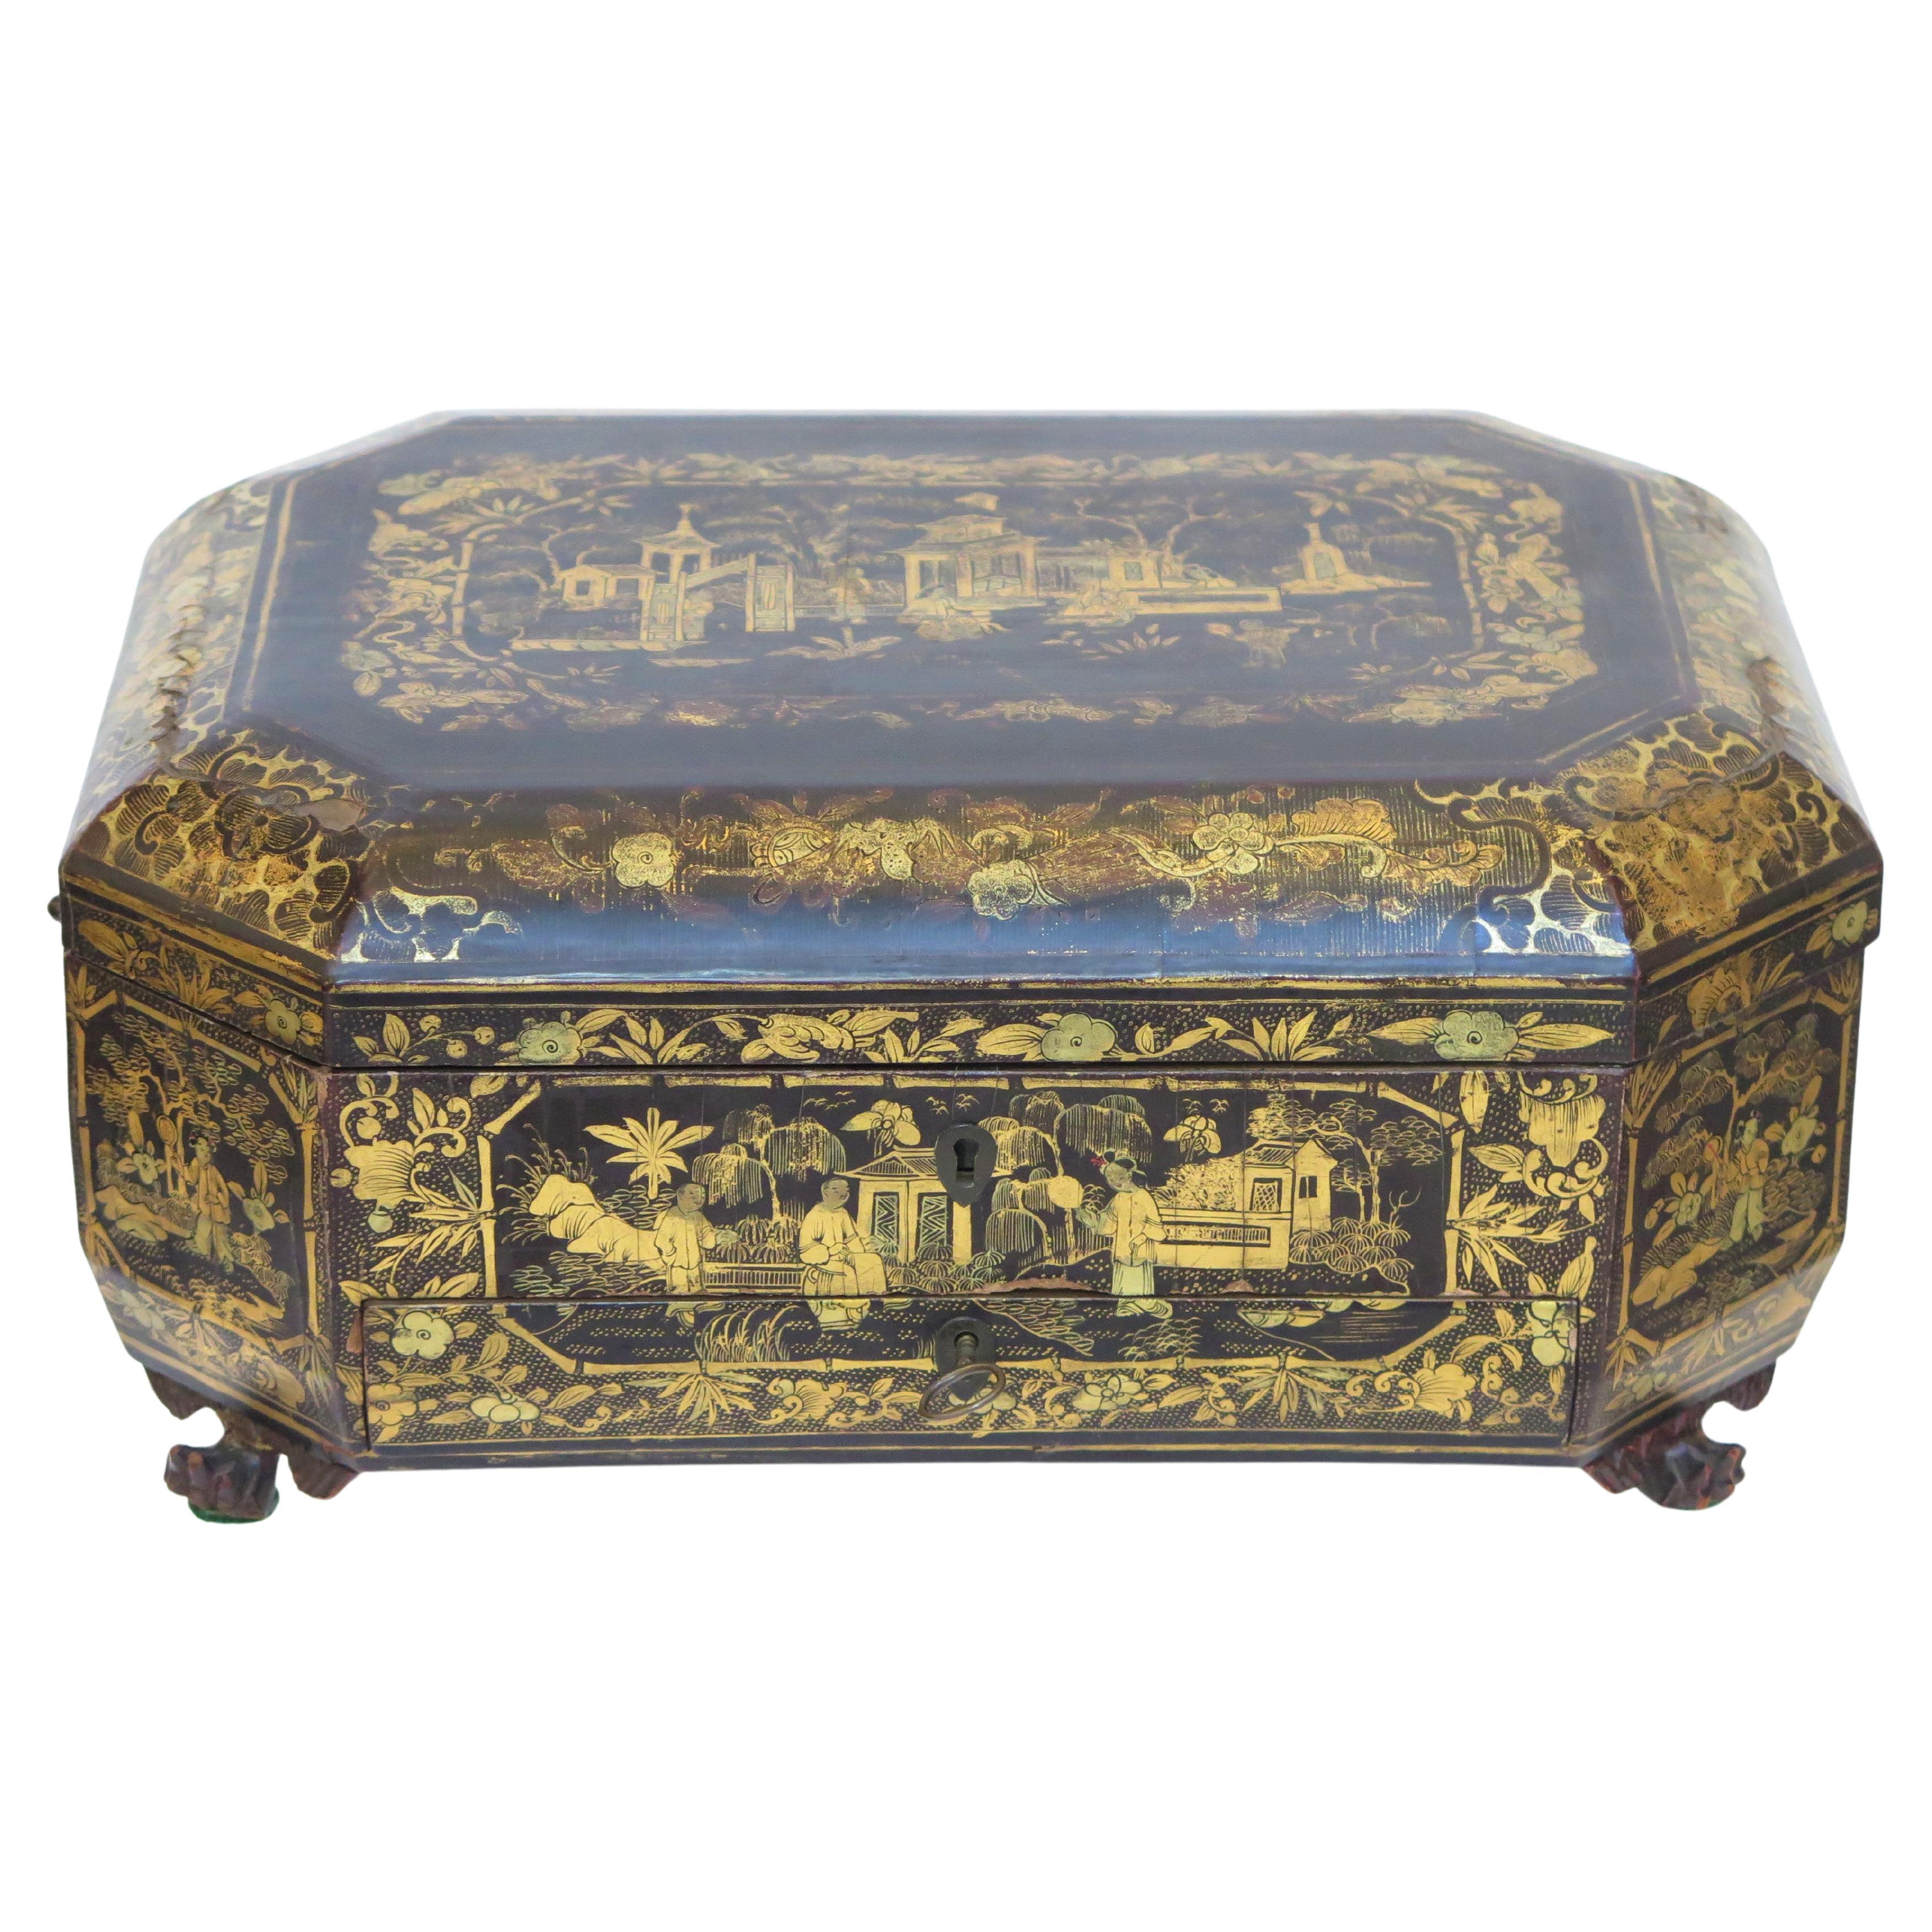 Ealy 19. Jahrhundert Chinesisch Export Lacquer Nähen Box im Angebot